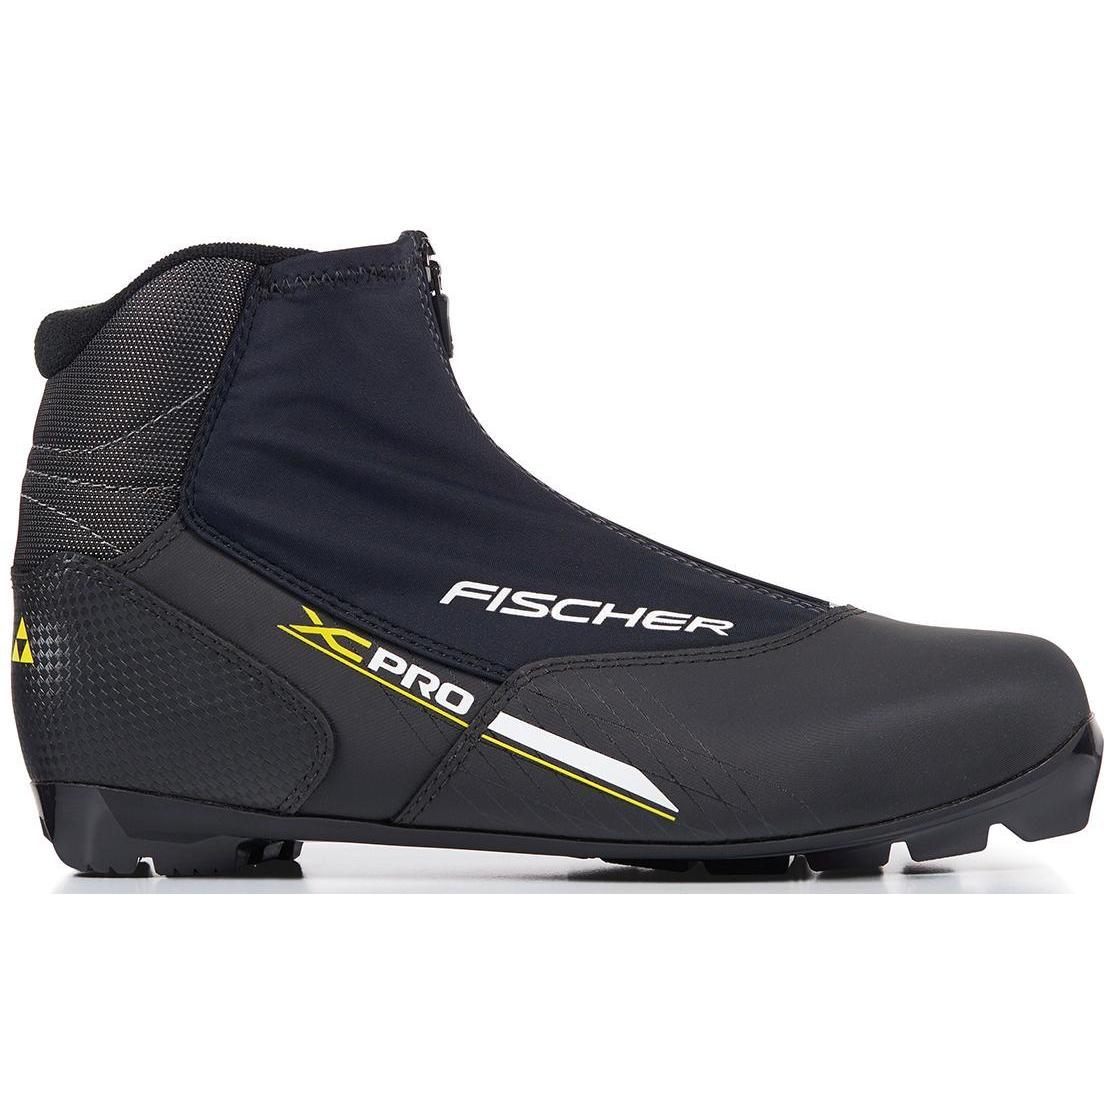 Лыжные ботинки FISCHER XC Pro Black/Yellow